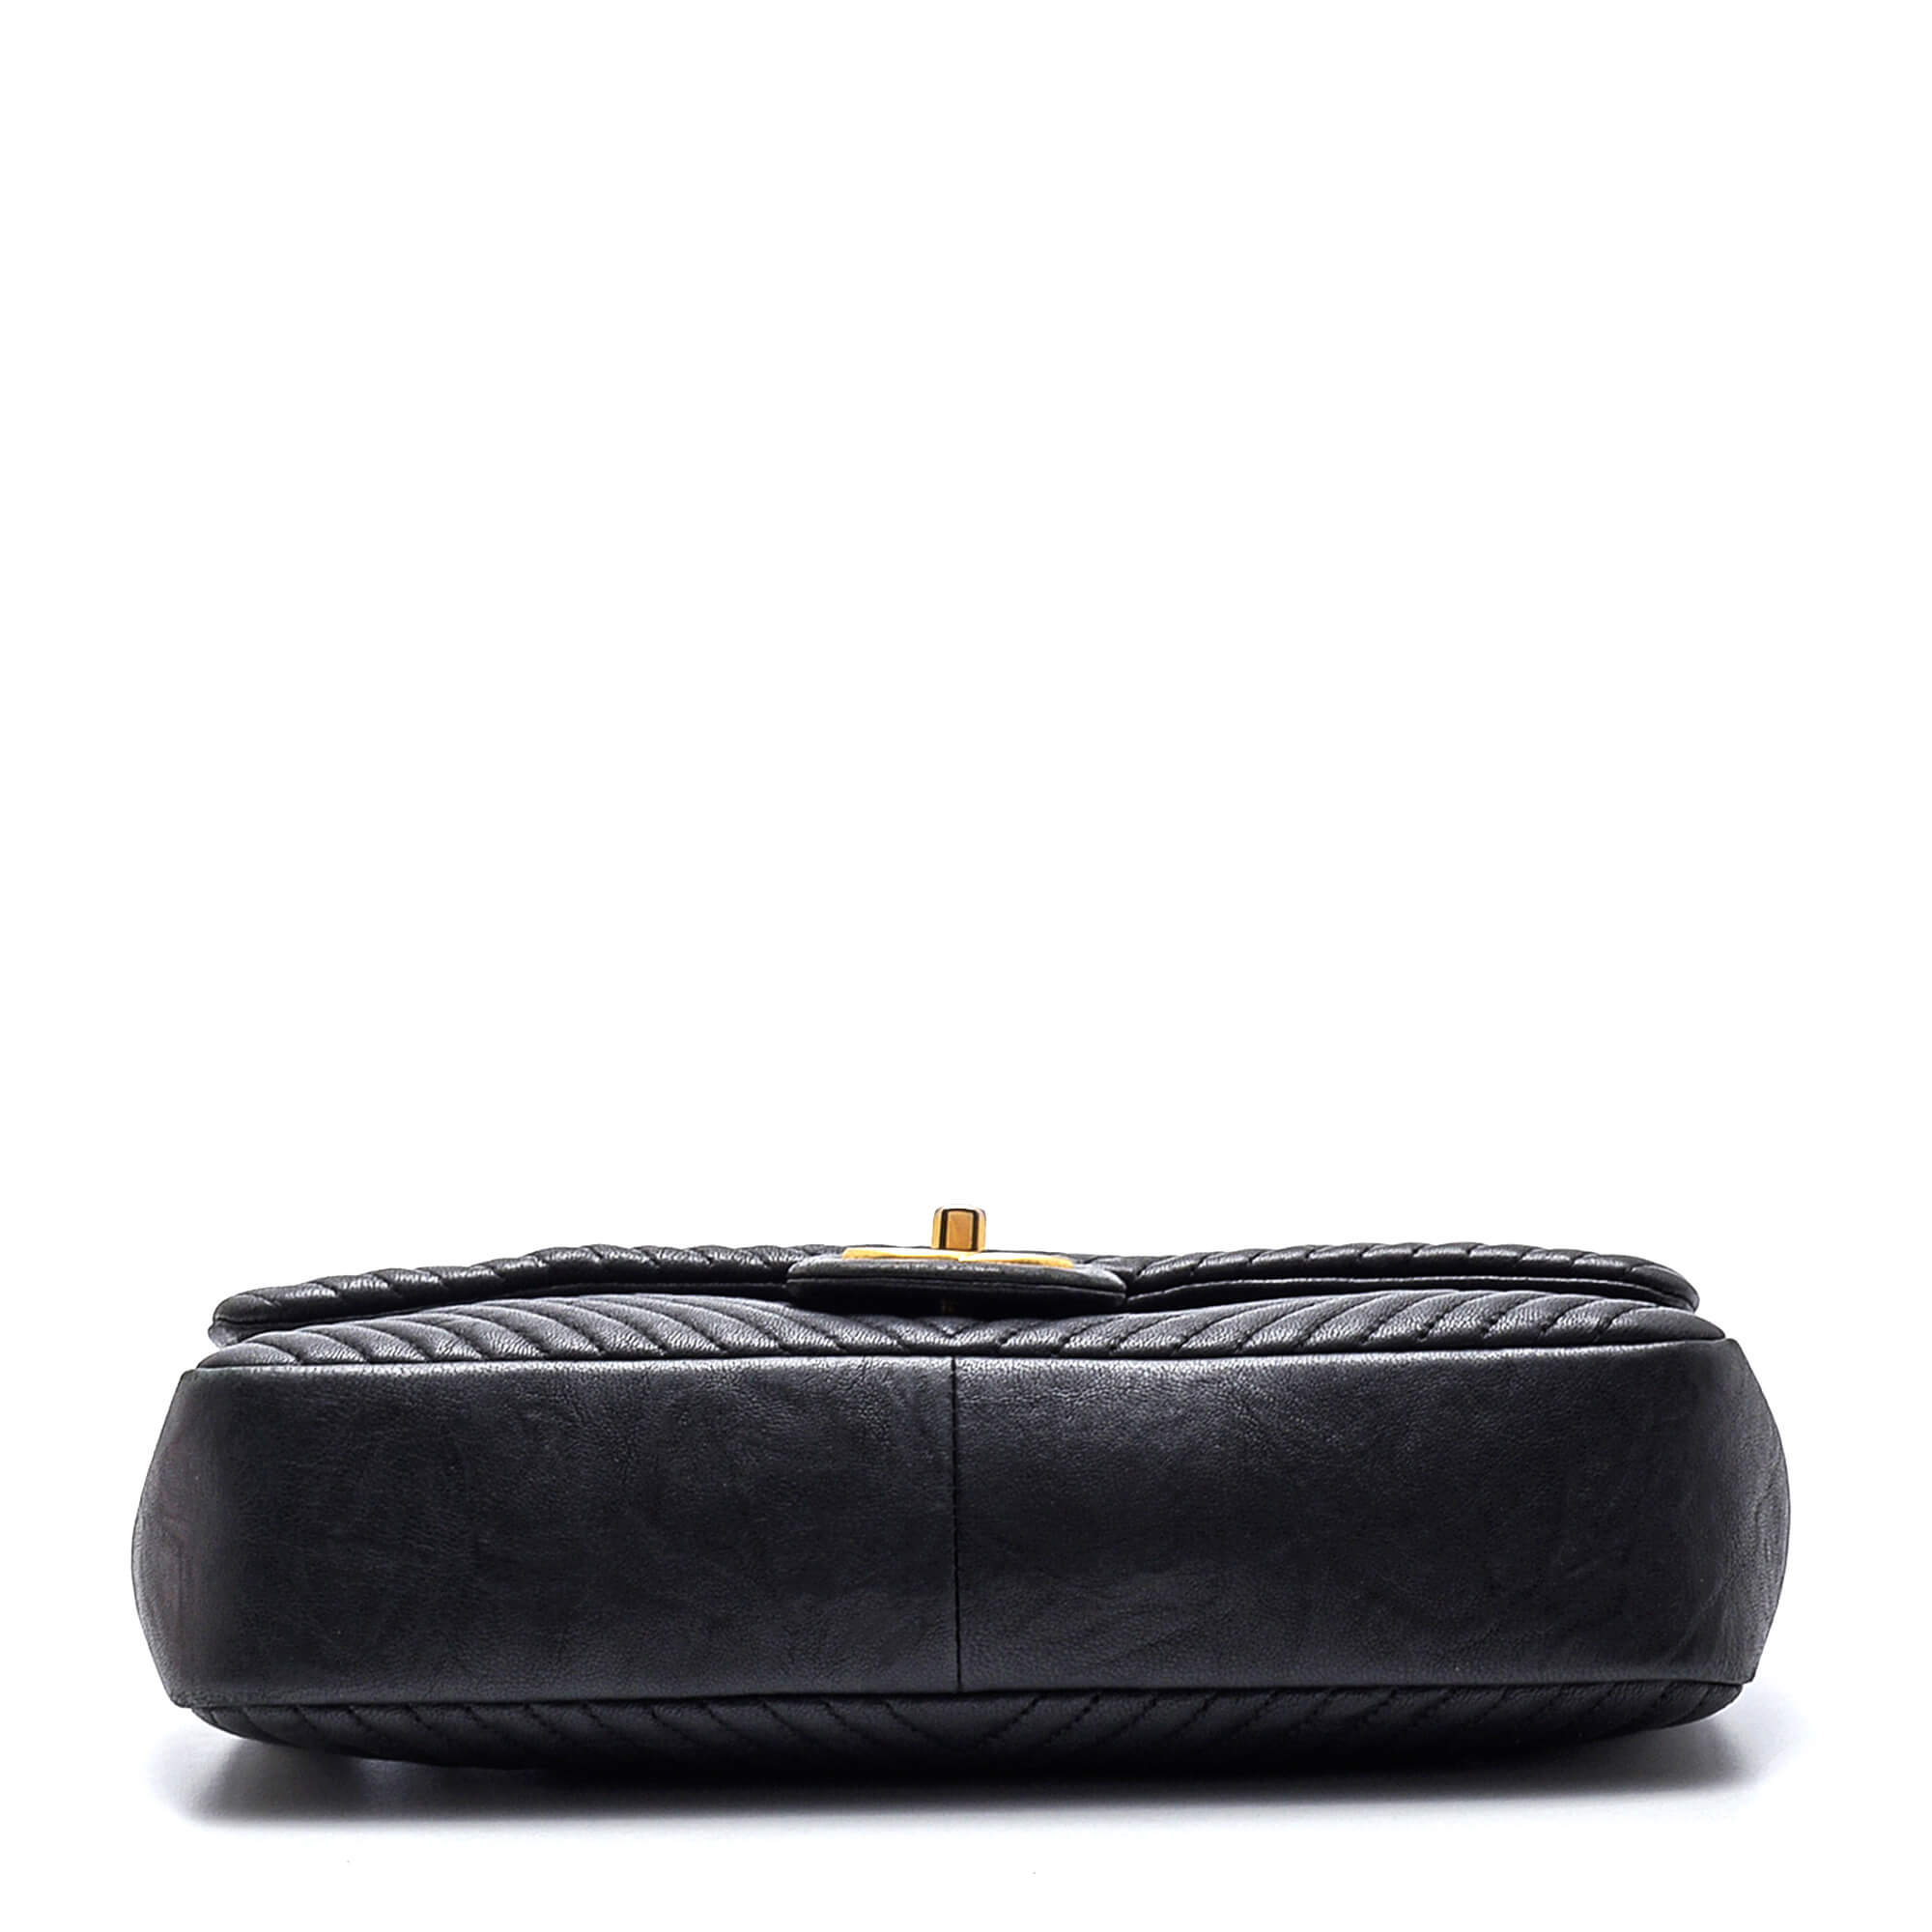 Chanel - Black Chevron Lambskin Leather Single Flap Bag 